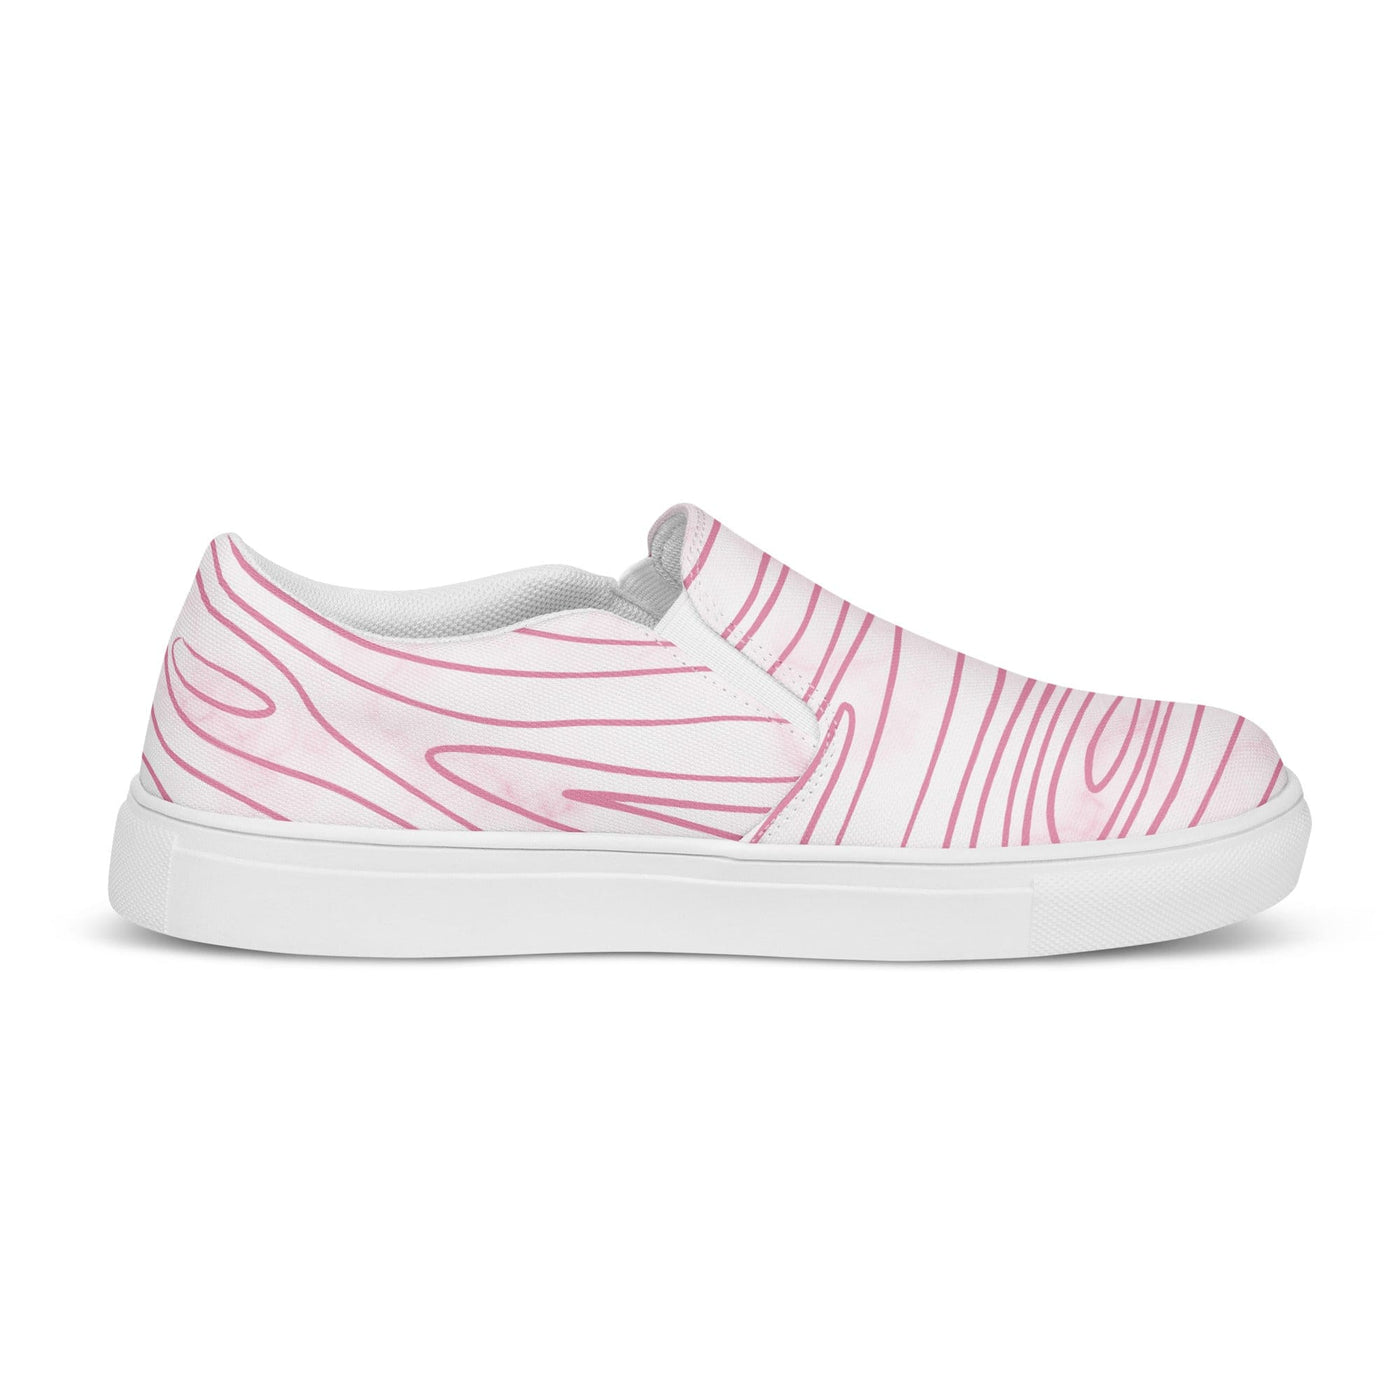 Men’s Slip-on Canvas Shoes Pink Line Art Sketch Print - Mens | Sneakers